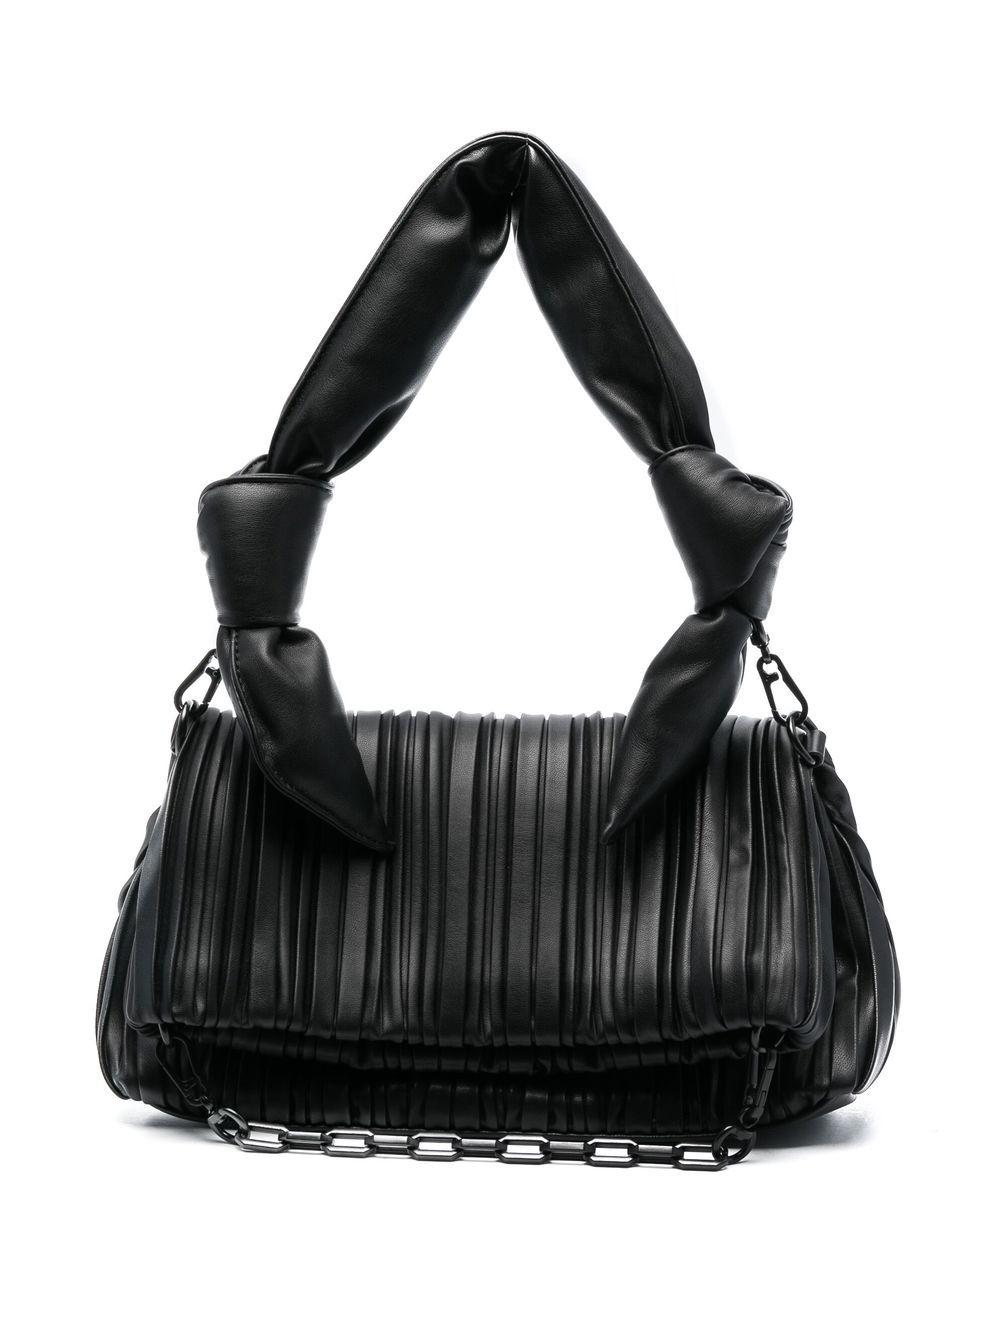 Karl Lagerfeld K/kushion Small Folding Tote Bag in Black | Lyst